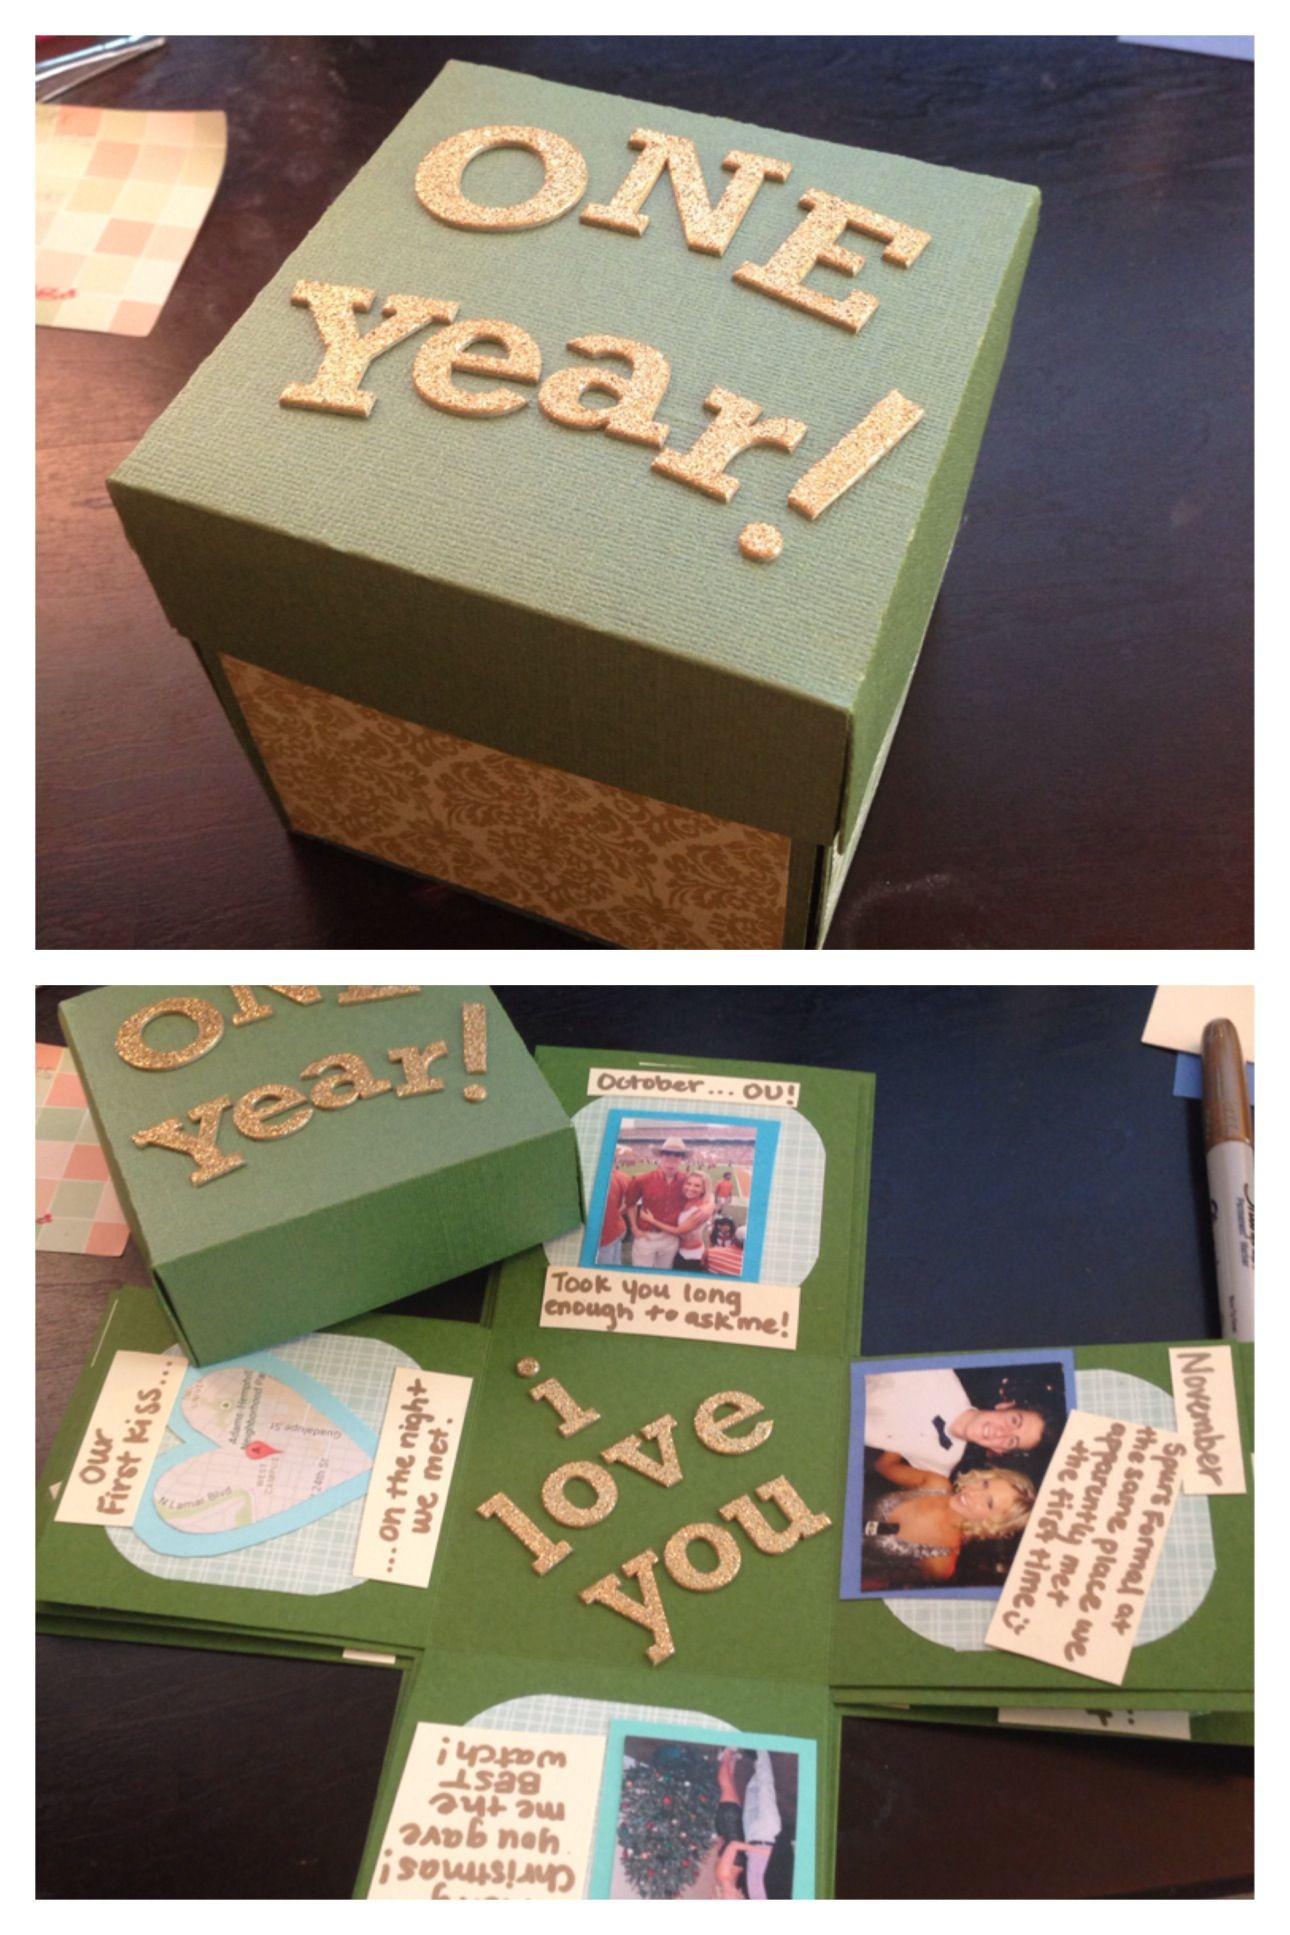 Cute Gift Ideas For Boyfriends
 Boyfriend Anniversary Gifts on Pinterest